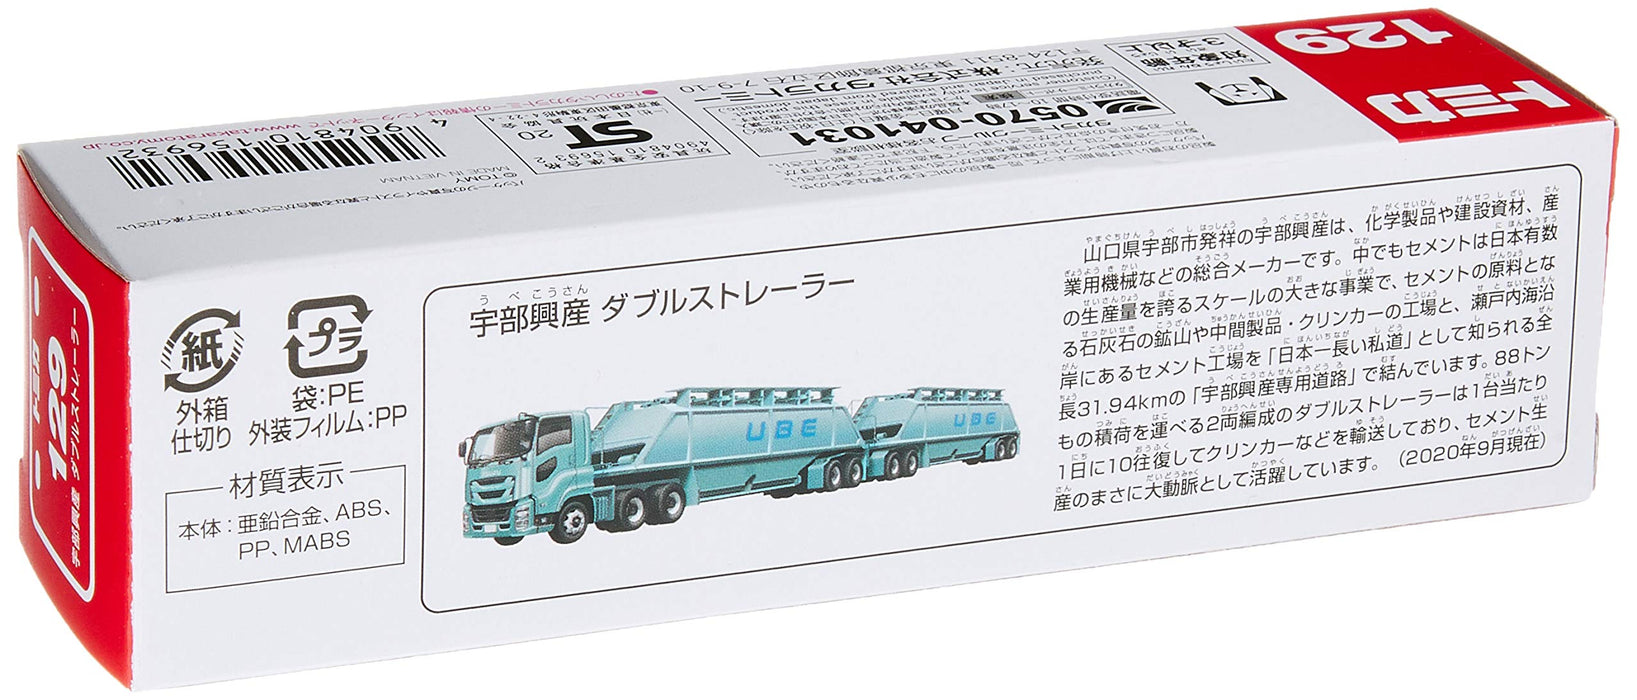 Takara Tomy Tomica Ube Industries Double Streller Japanese Plastic Transportation Models